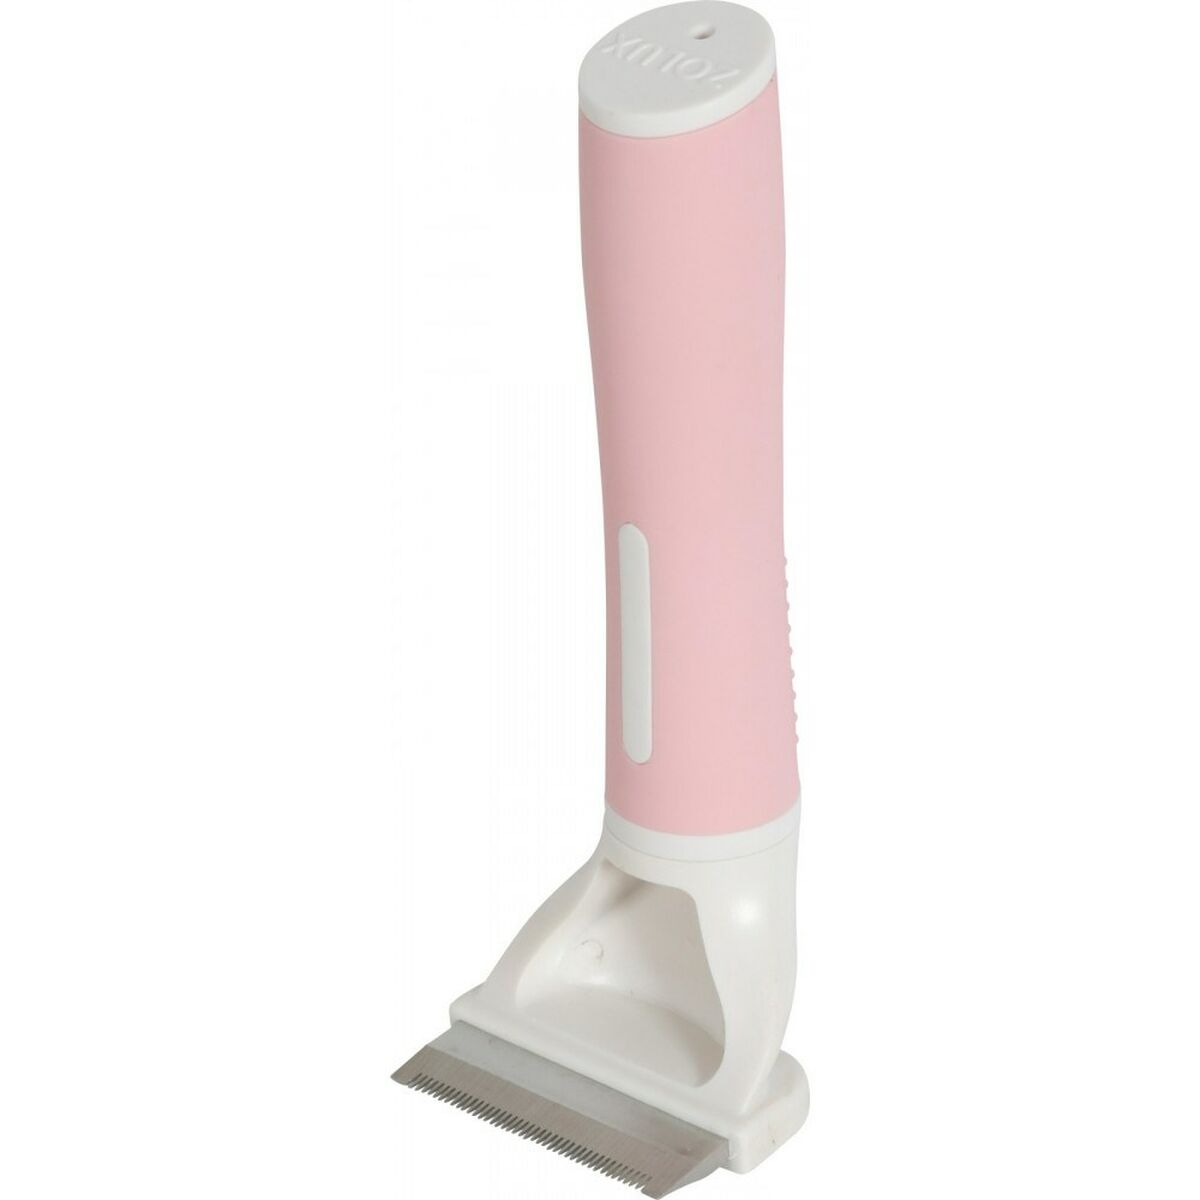 Brush Zolux 550008 Cat Small Multicolour Pink Steel Plastic